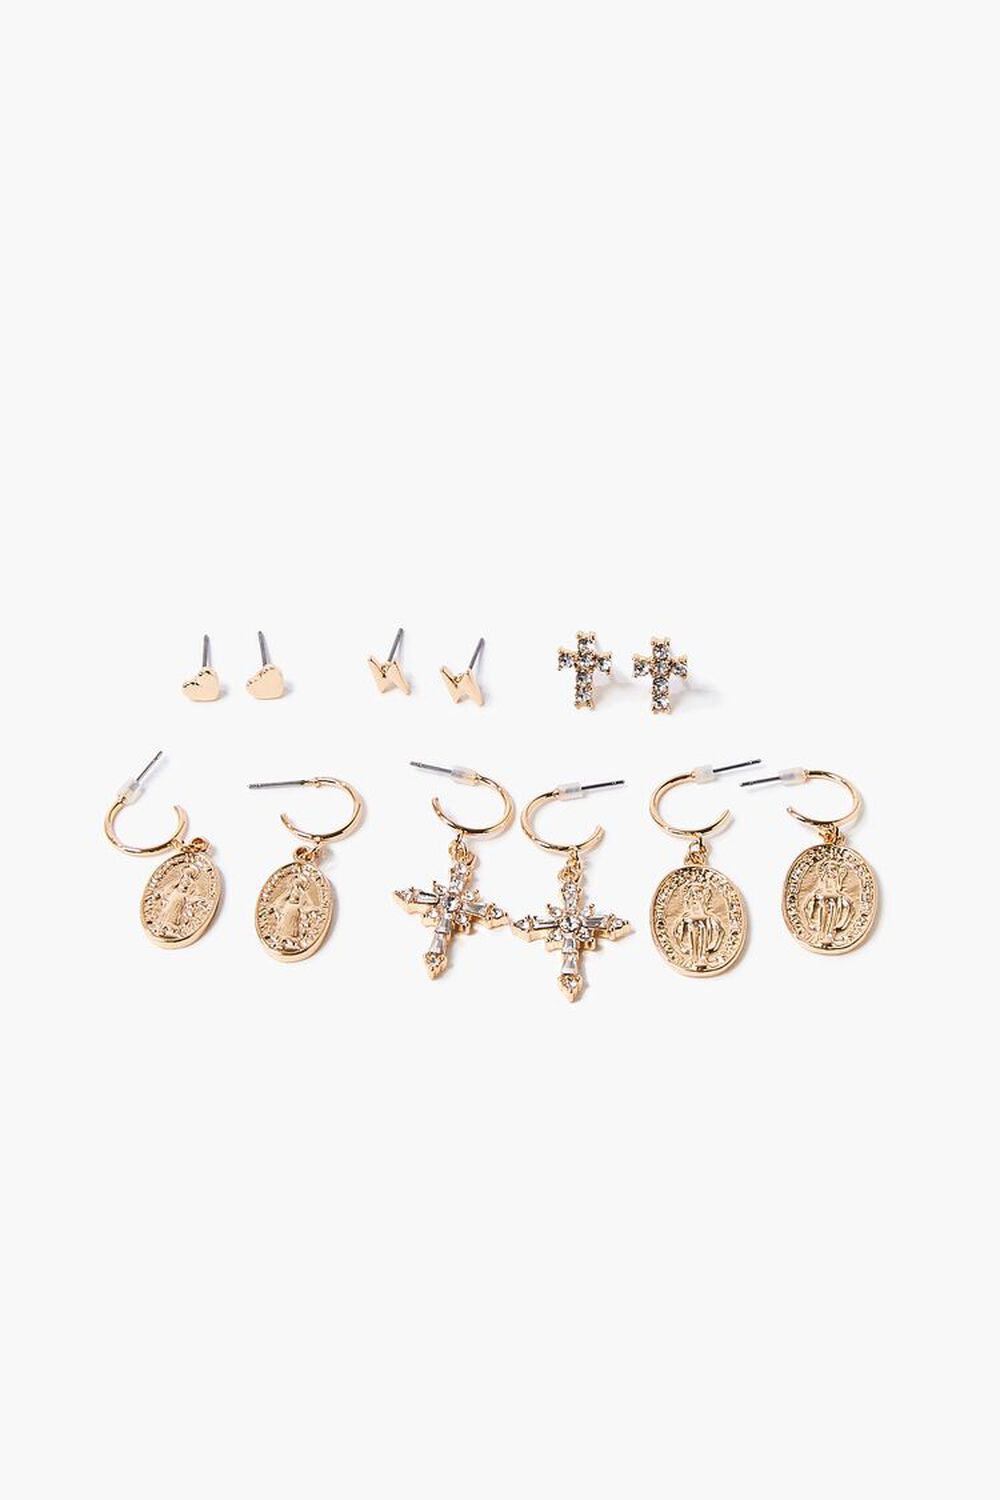 GOLD/CLEAR Cross Charm Drop & Stud Earring Set, image 1